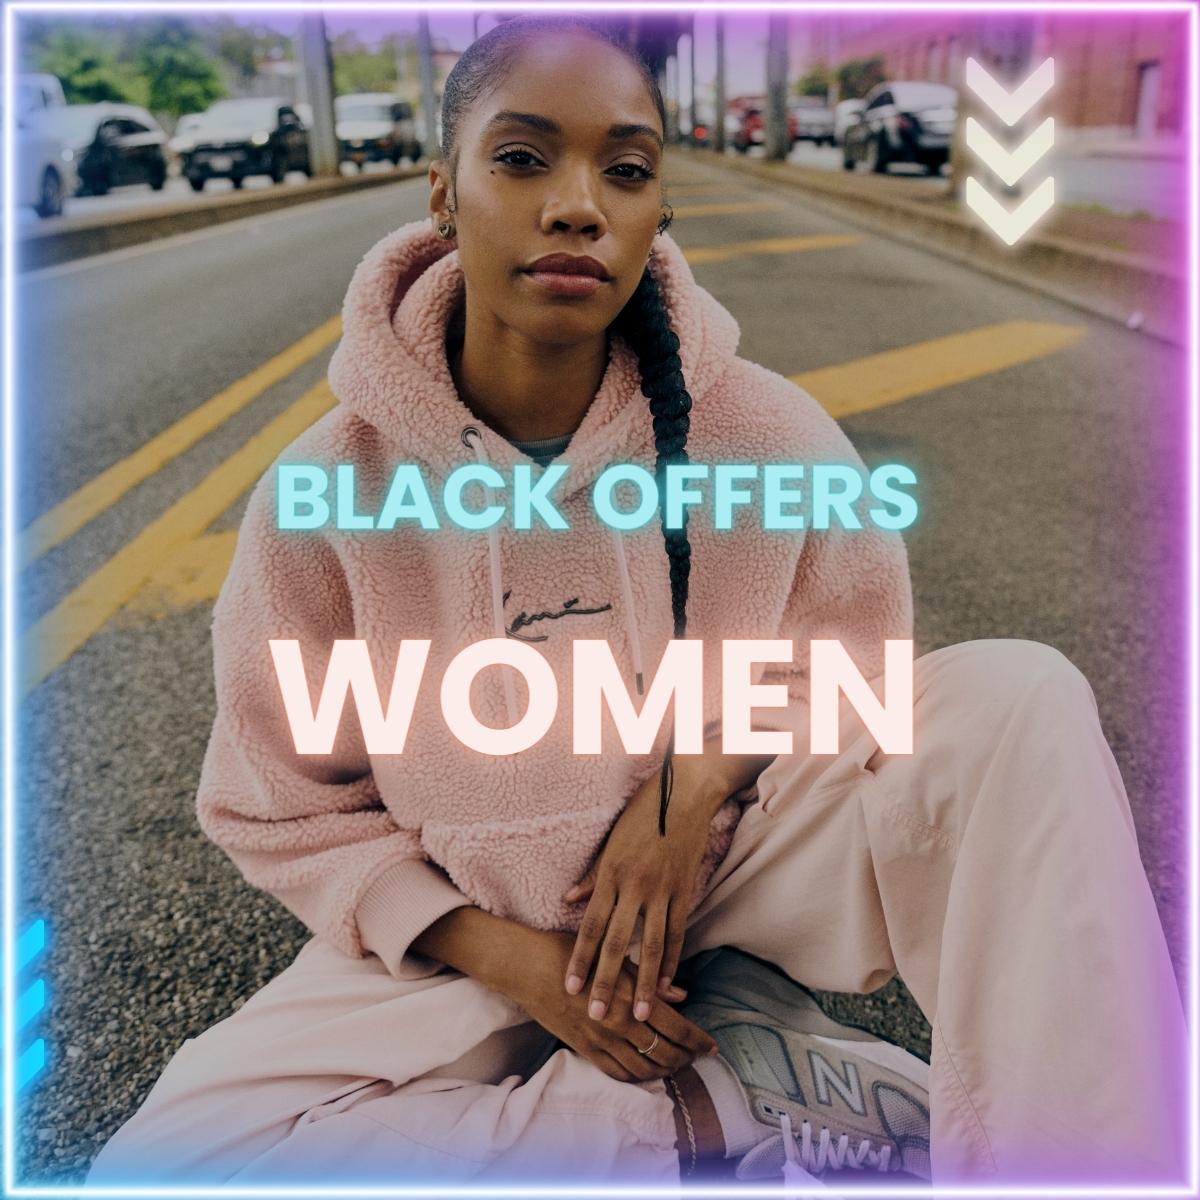 Black Friday Women